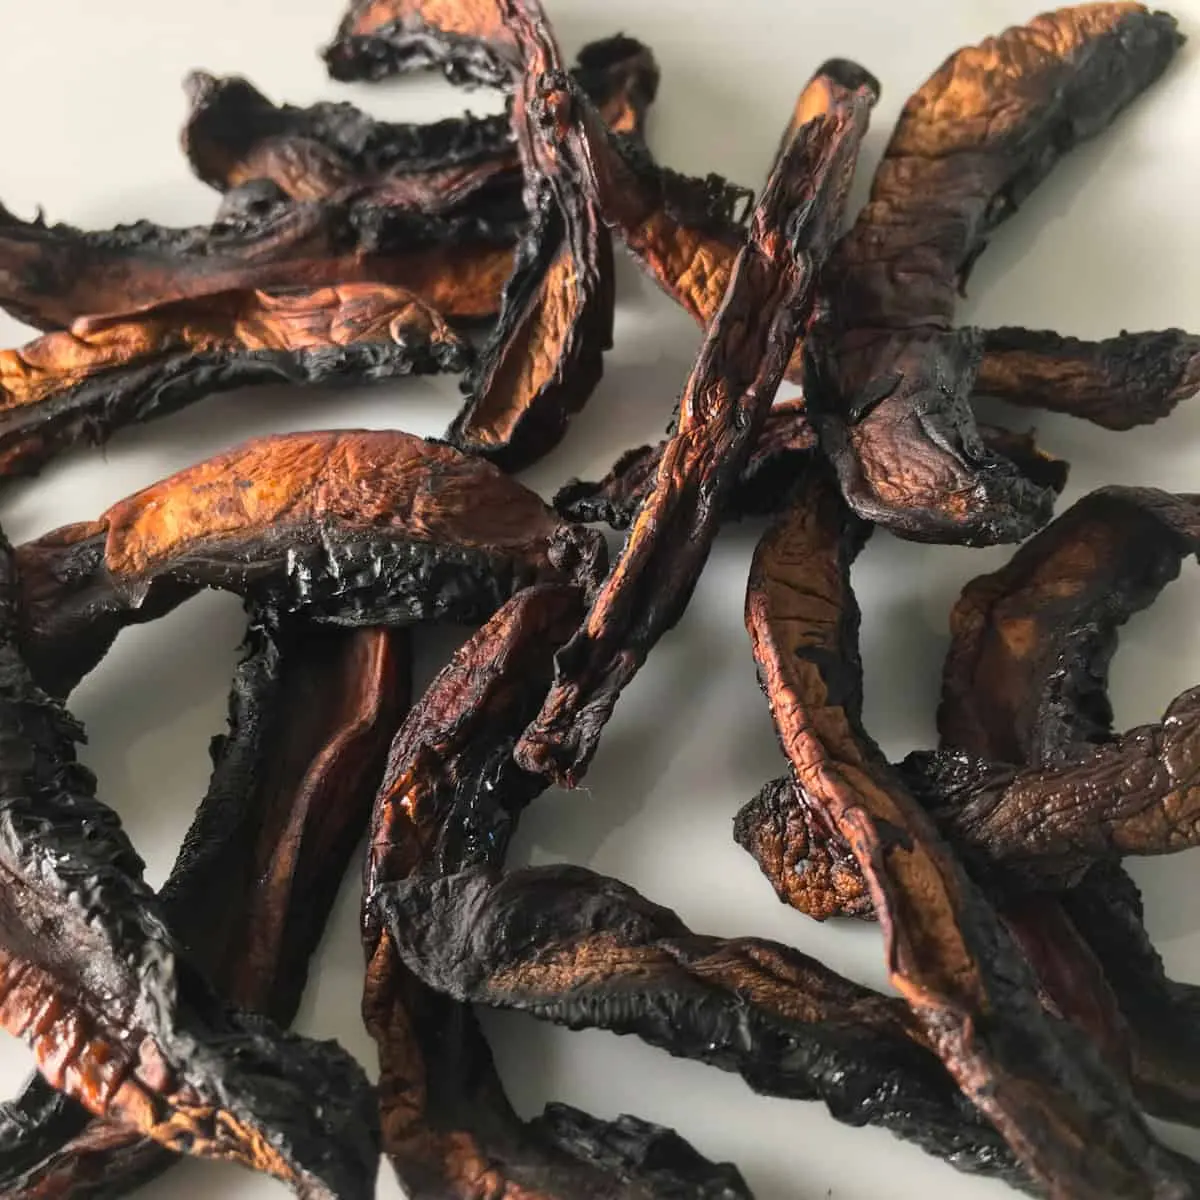 dried smoked mushrooms - Are dried mushrooms as healthy